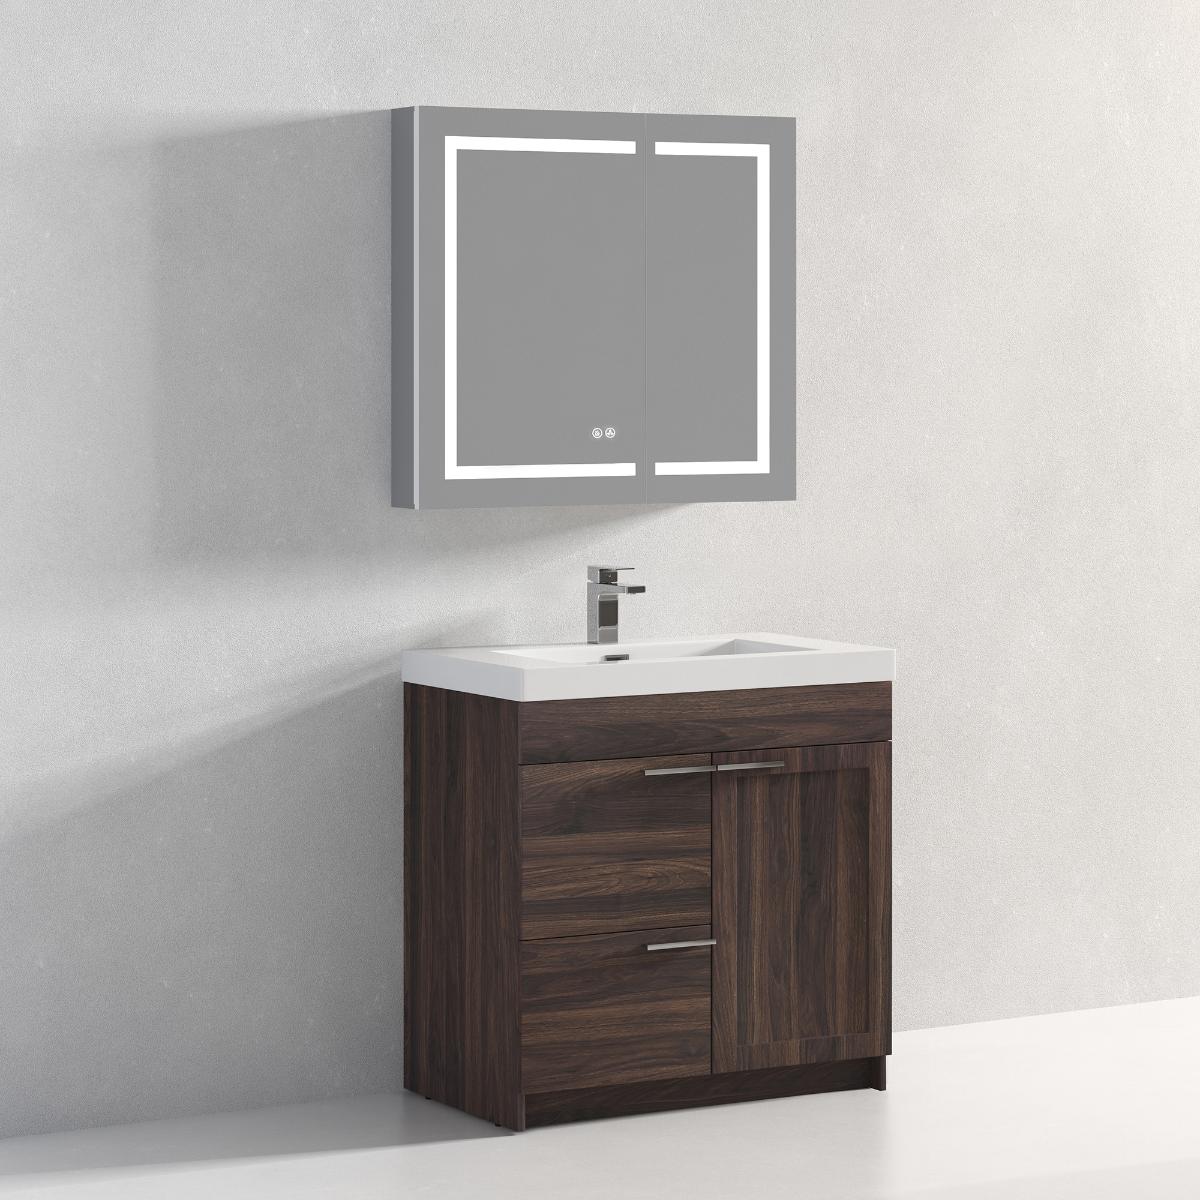 Hanover 36" Bathroom Vanity  #size_36"  #color_cali walnut